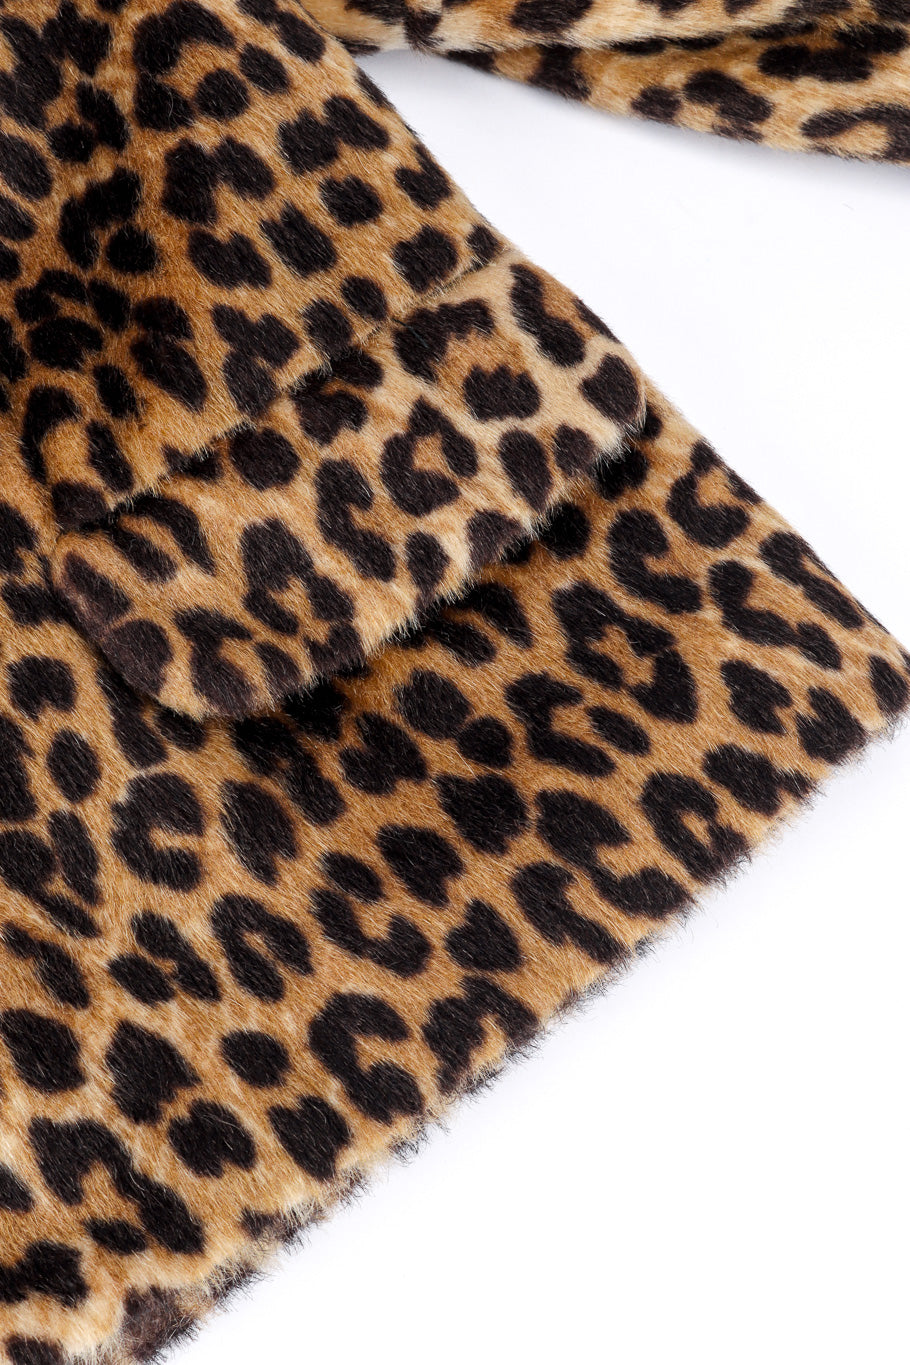 Vintage Marcus Leopard Print Jacket patch pocket closeup @recessla